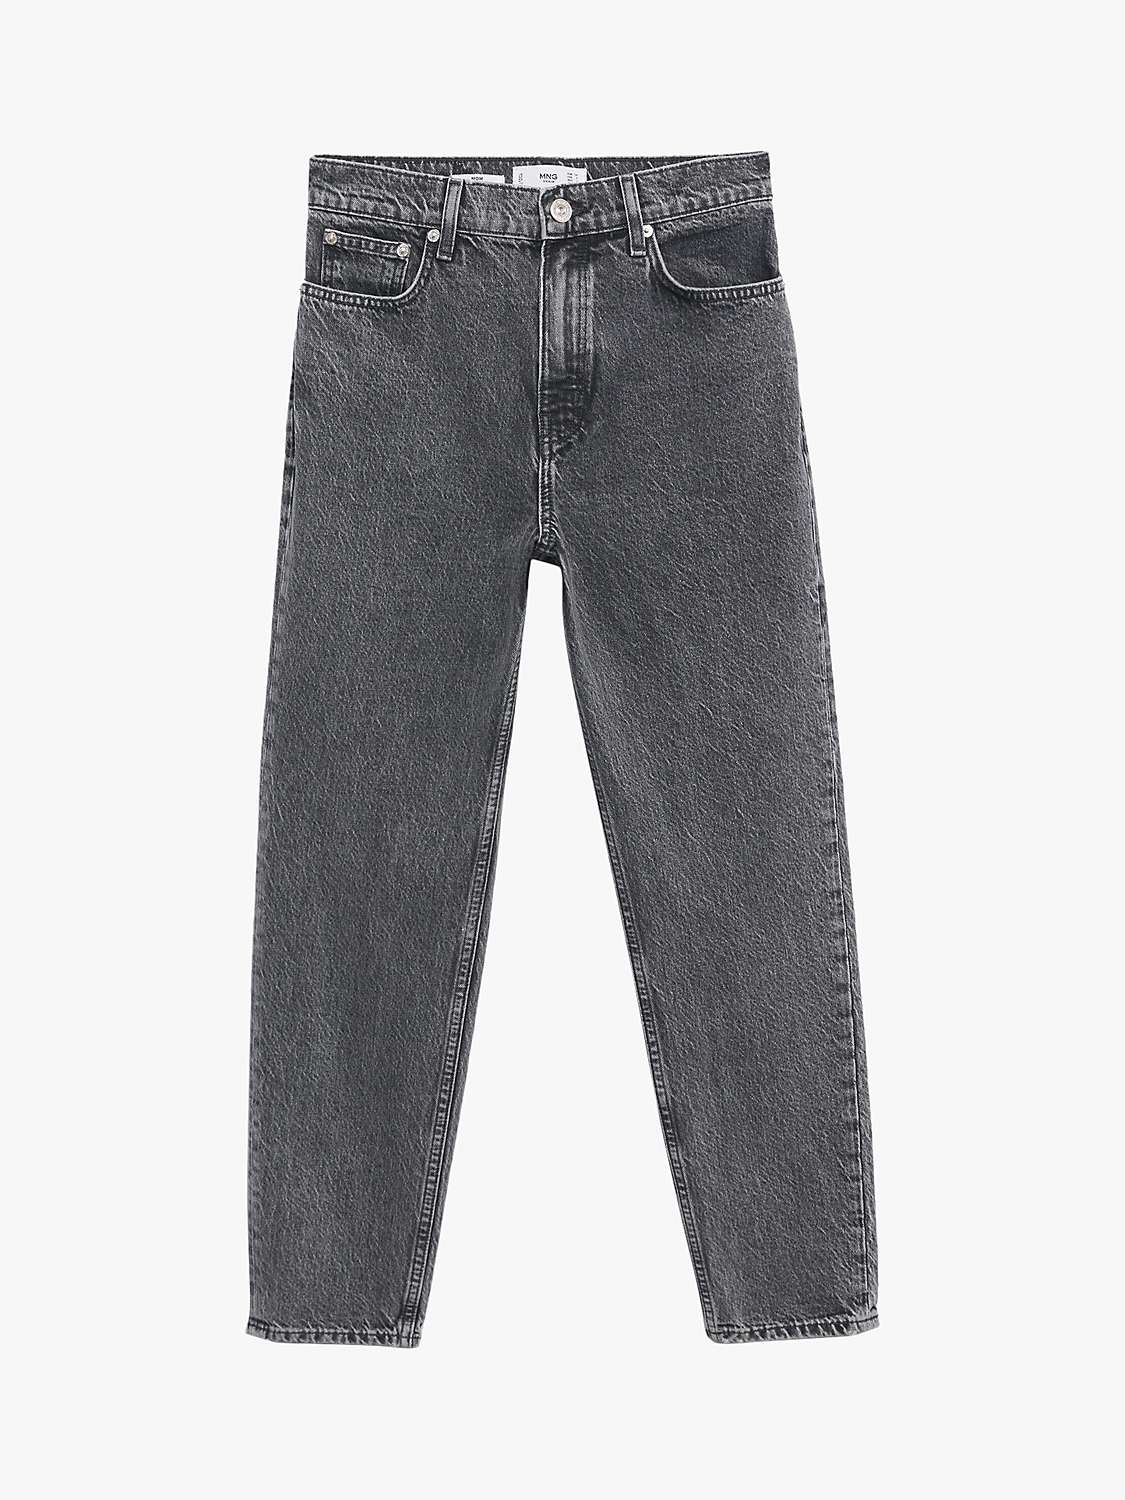 Buy Mango Mom Fit Jeans Online at johnlewis.com